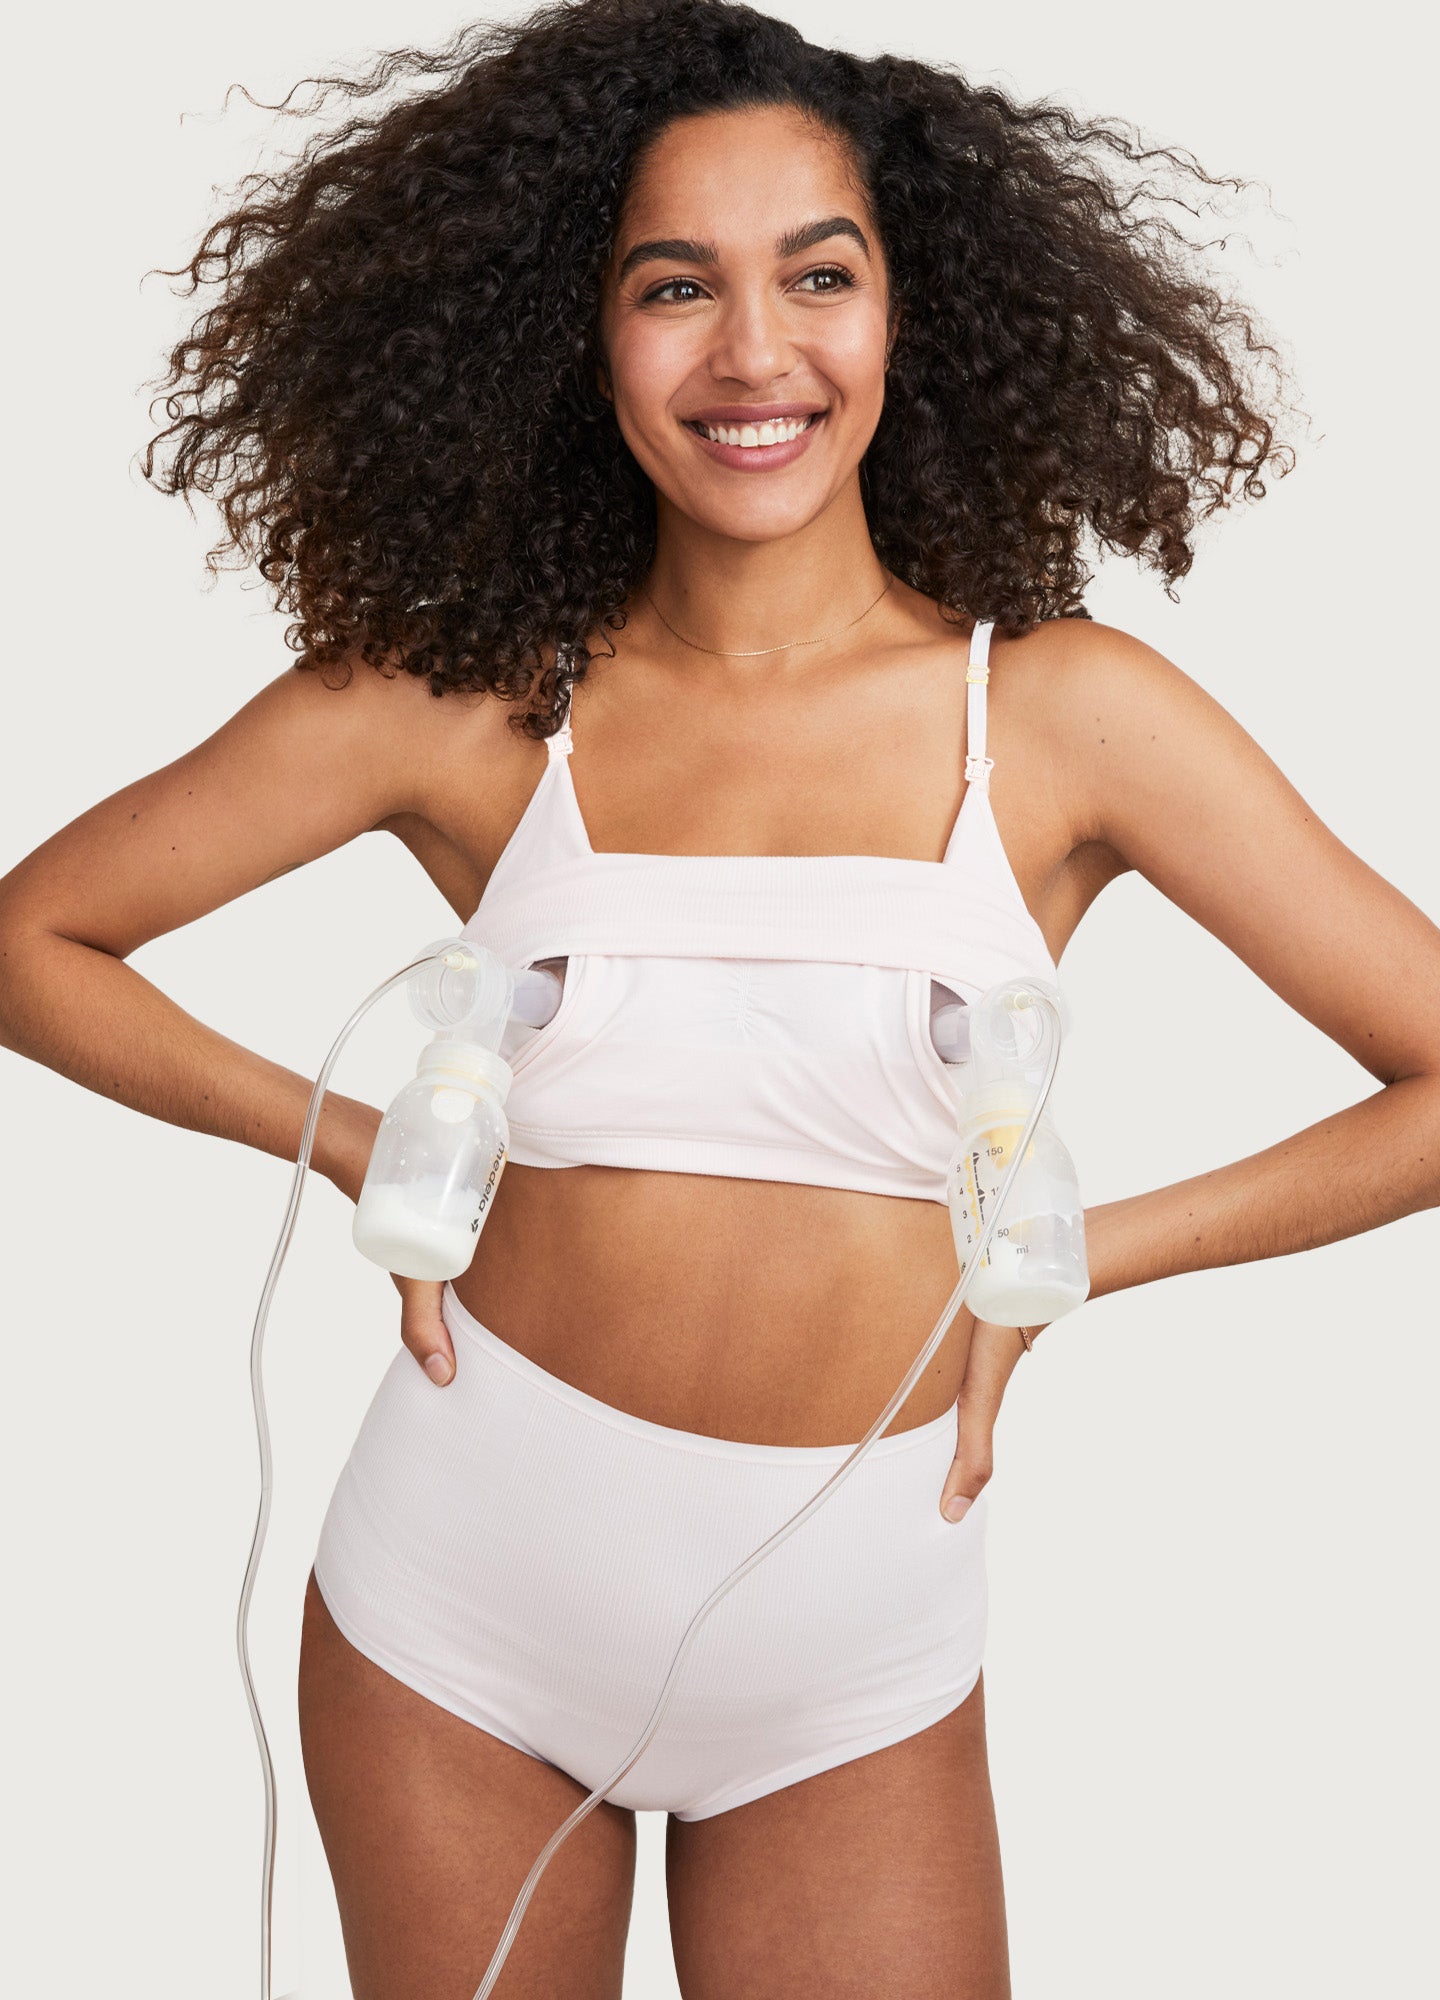 Aloohaidyvio hanes underwear for women,Women Feeding Nursing Pregnant Maternity  Bra Breastfeeding Underwear 